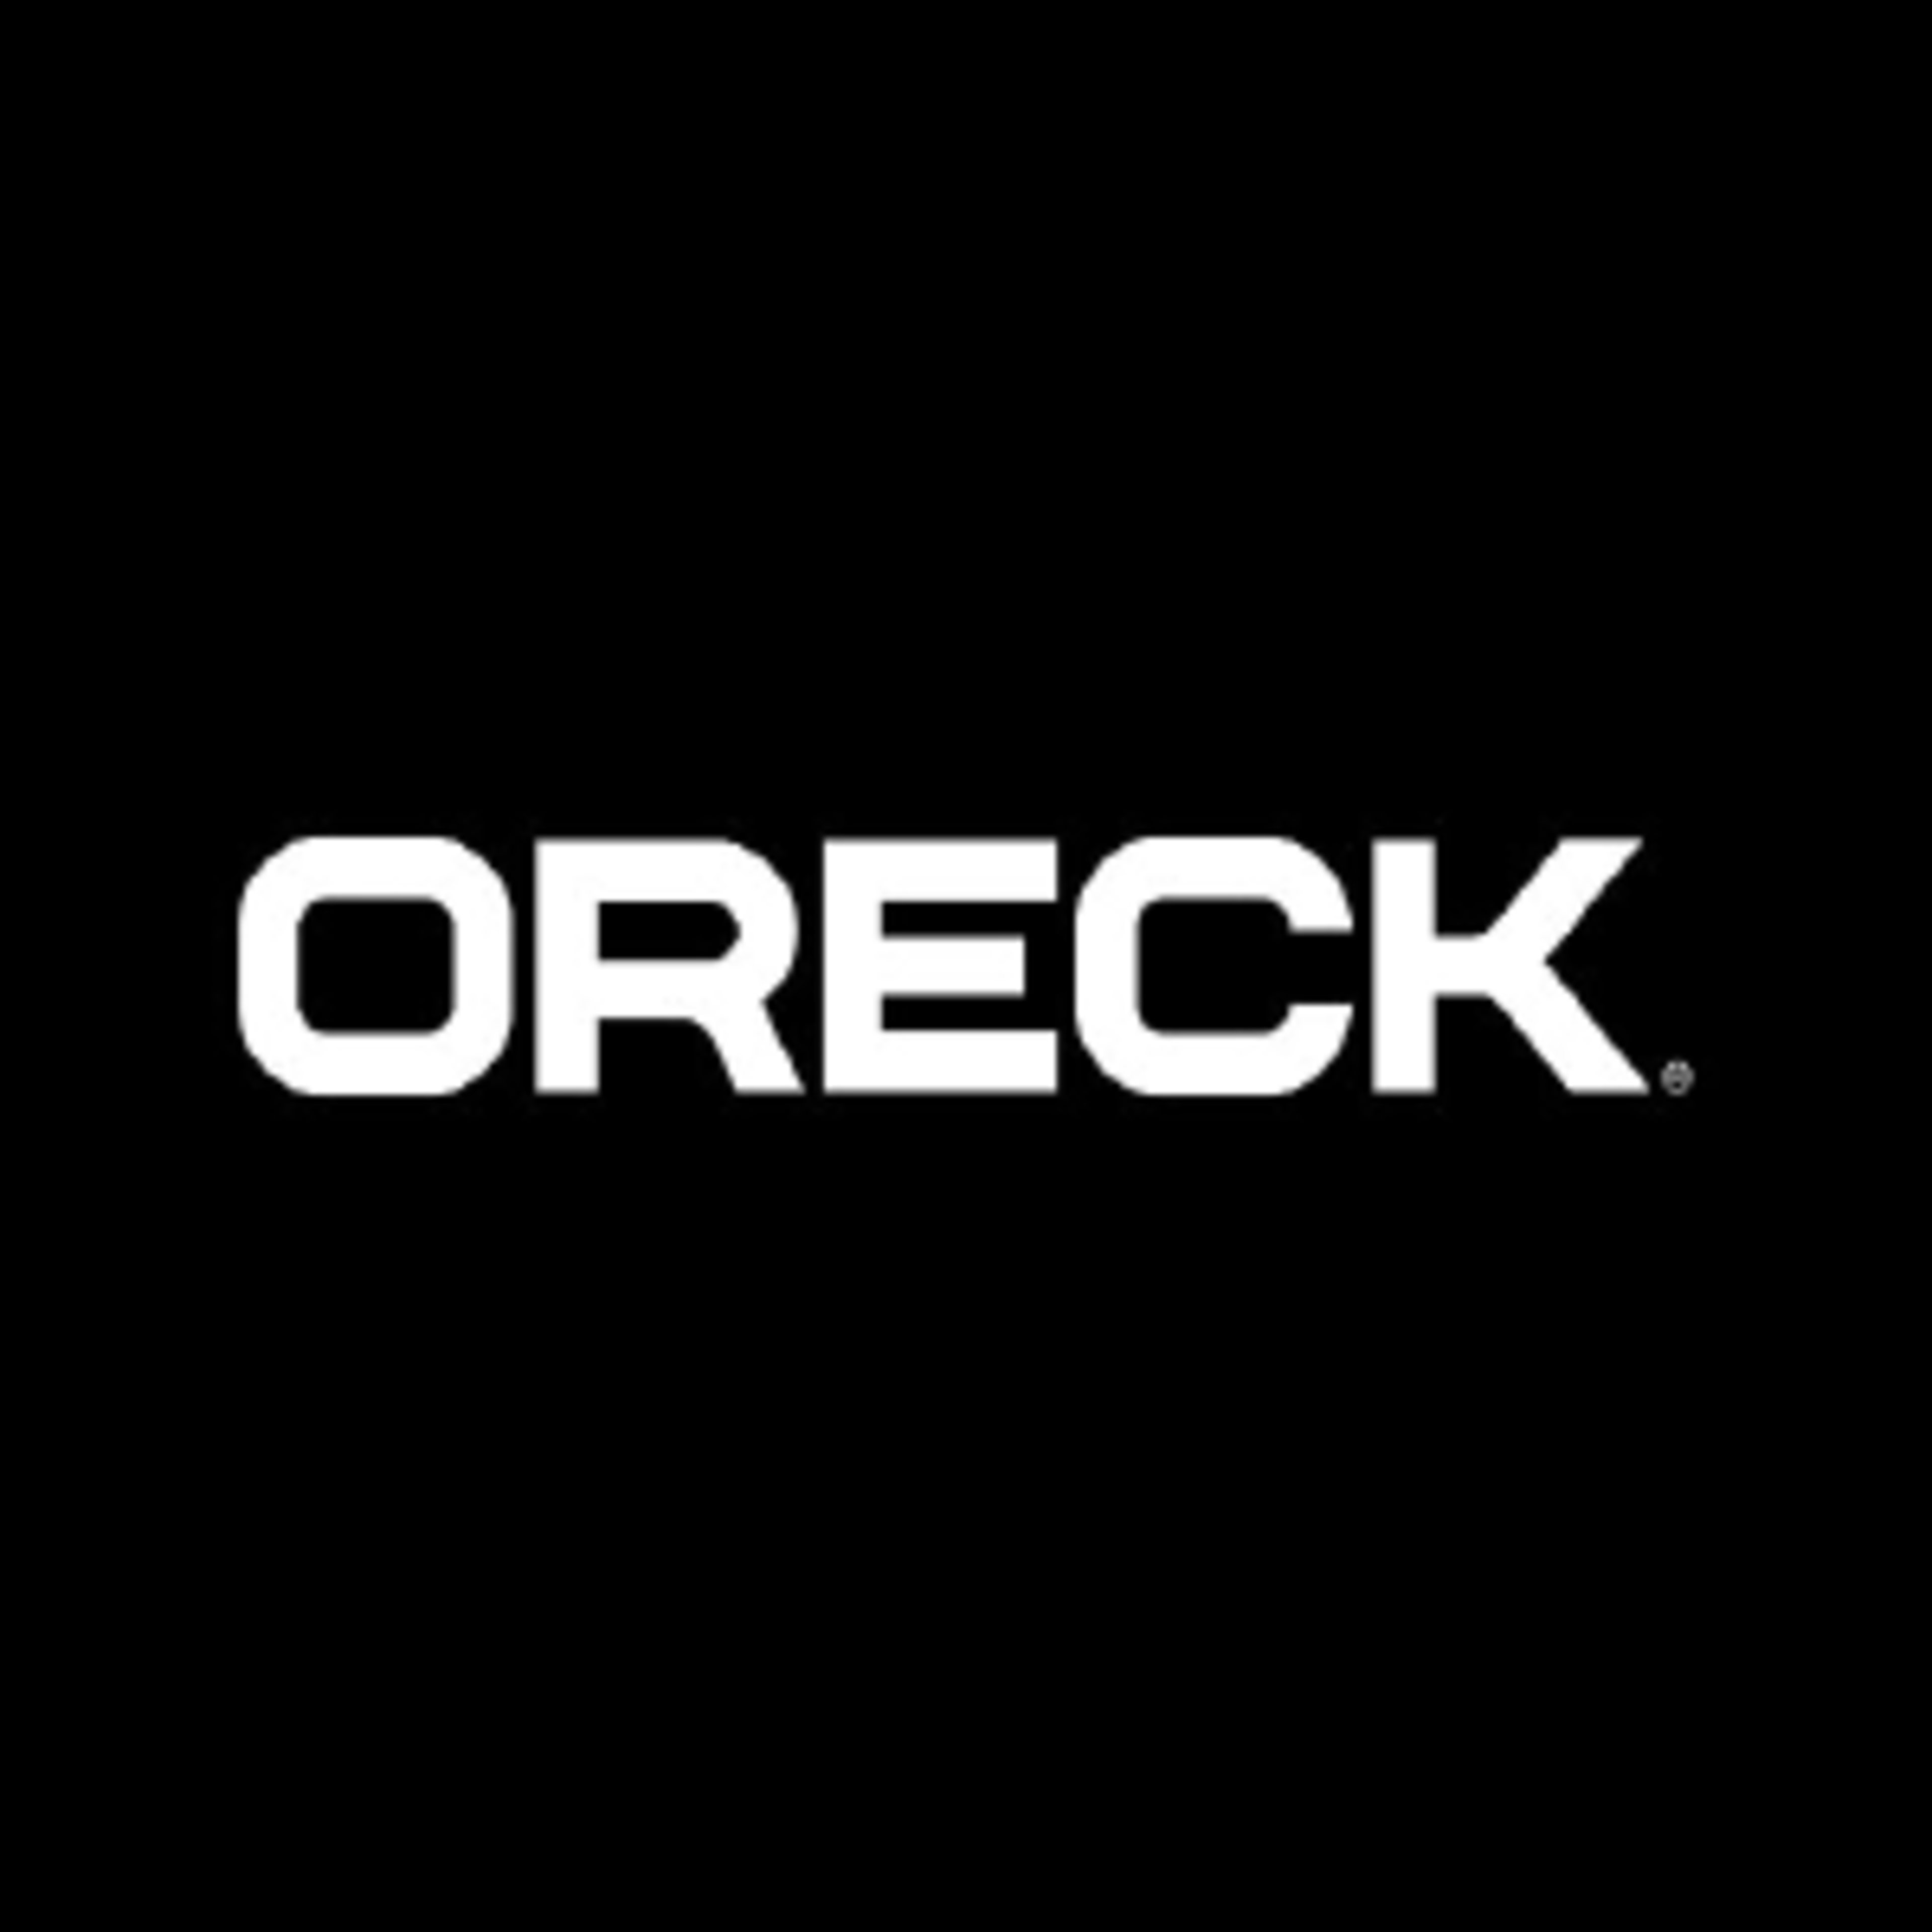 OreckCode